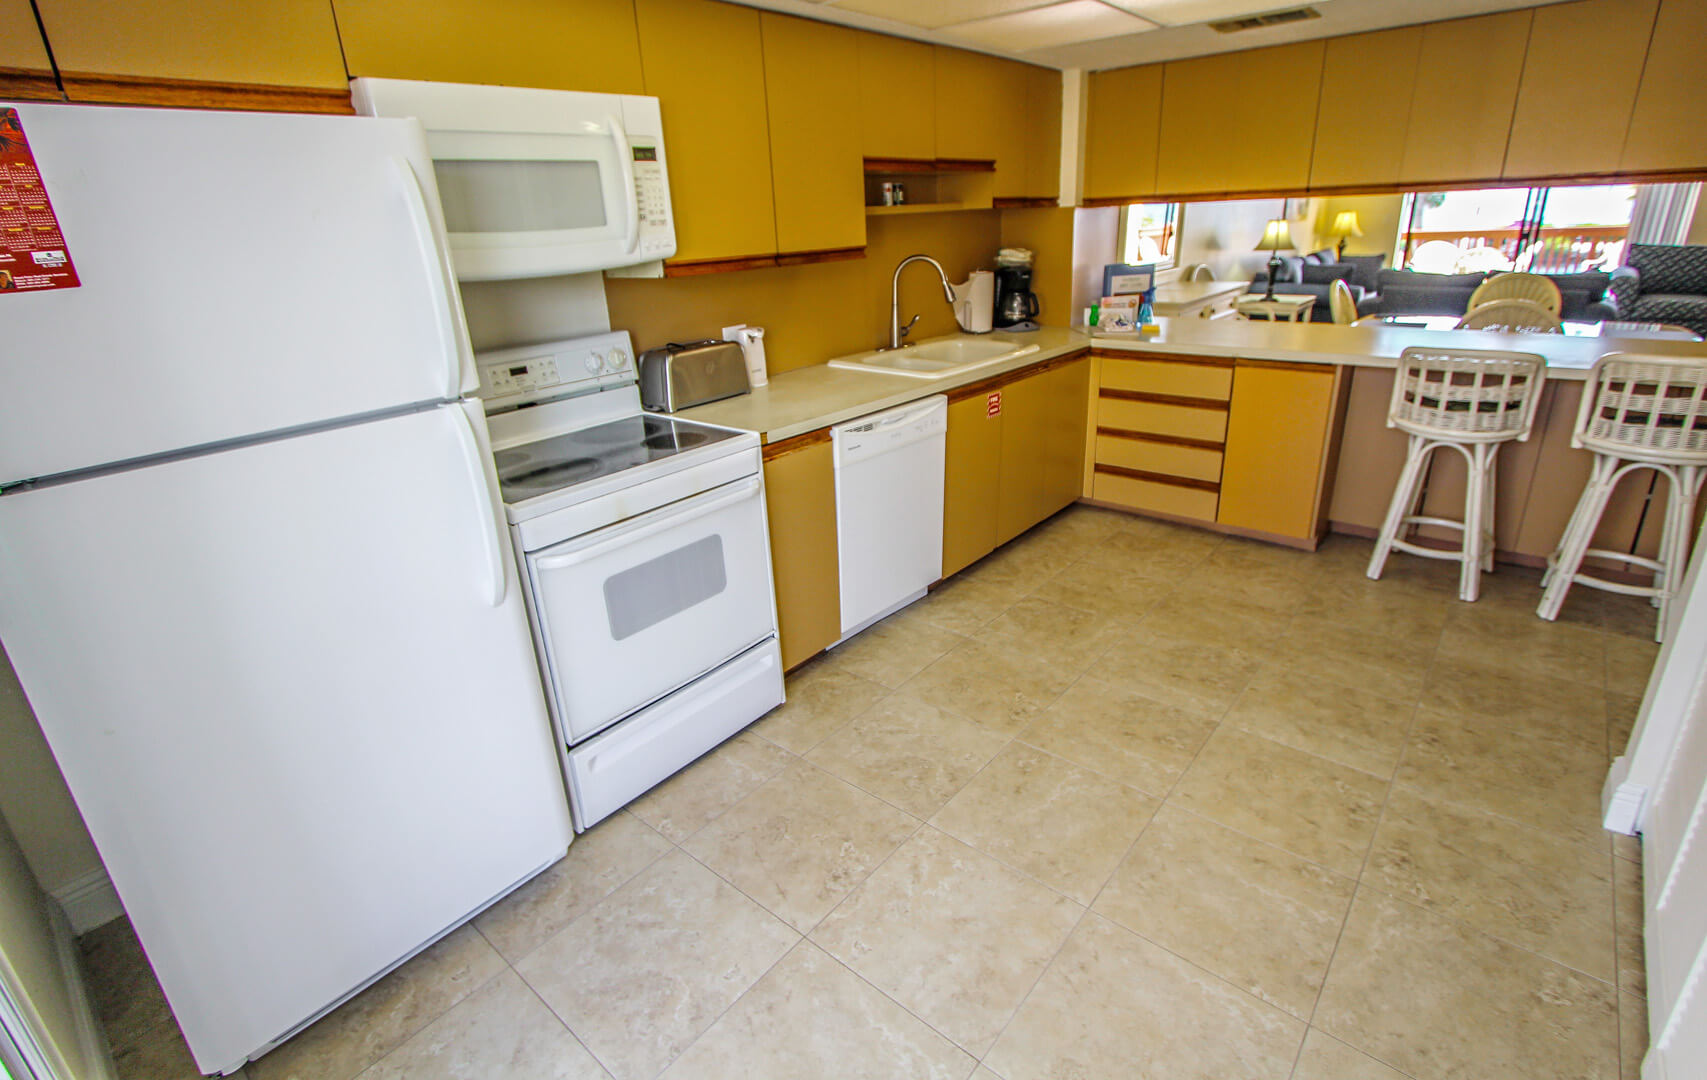 A standard full kitchen at VRI's Florida Bay Club in Florida.